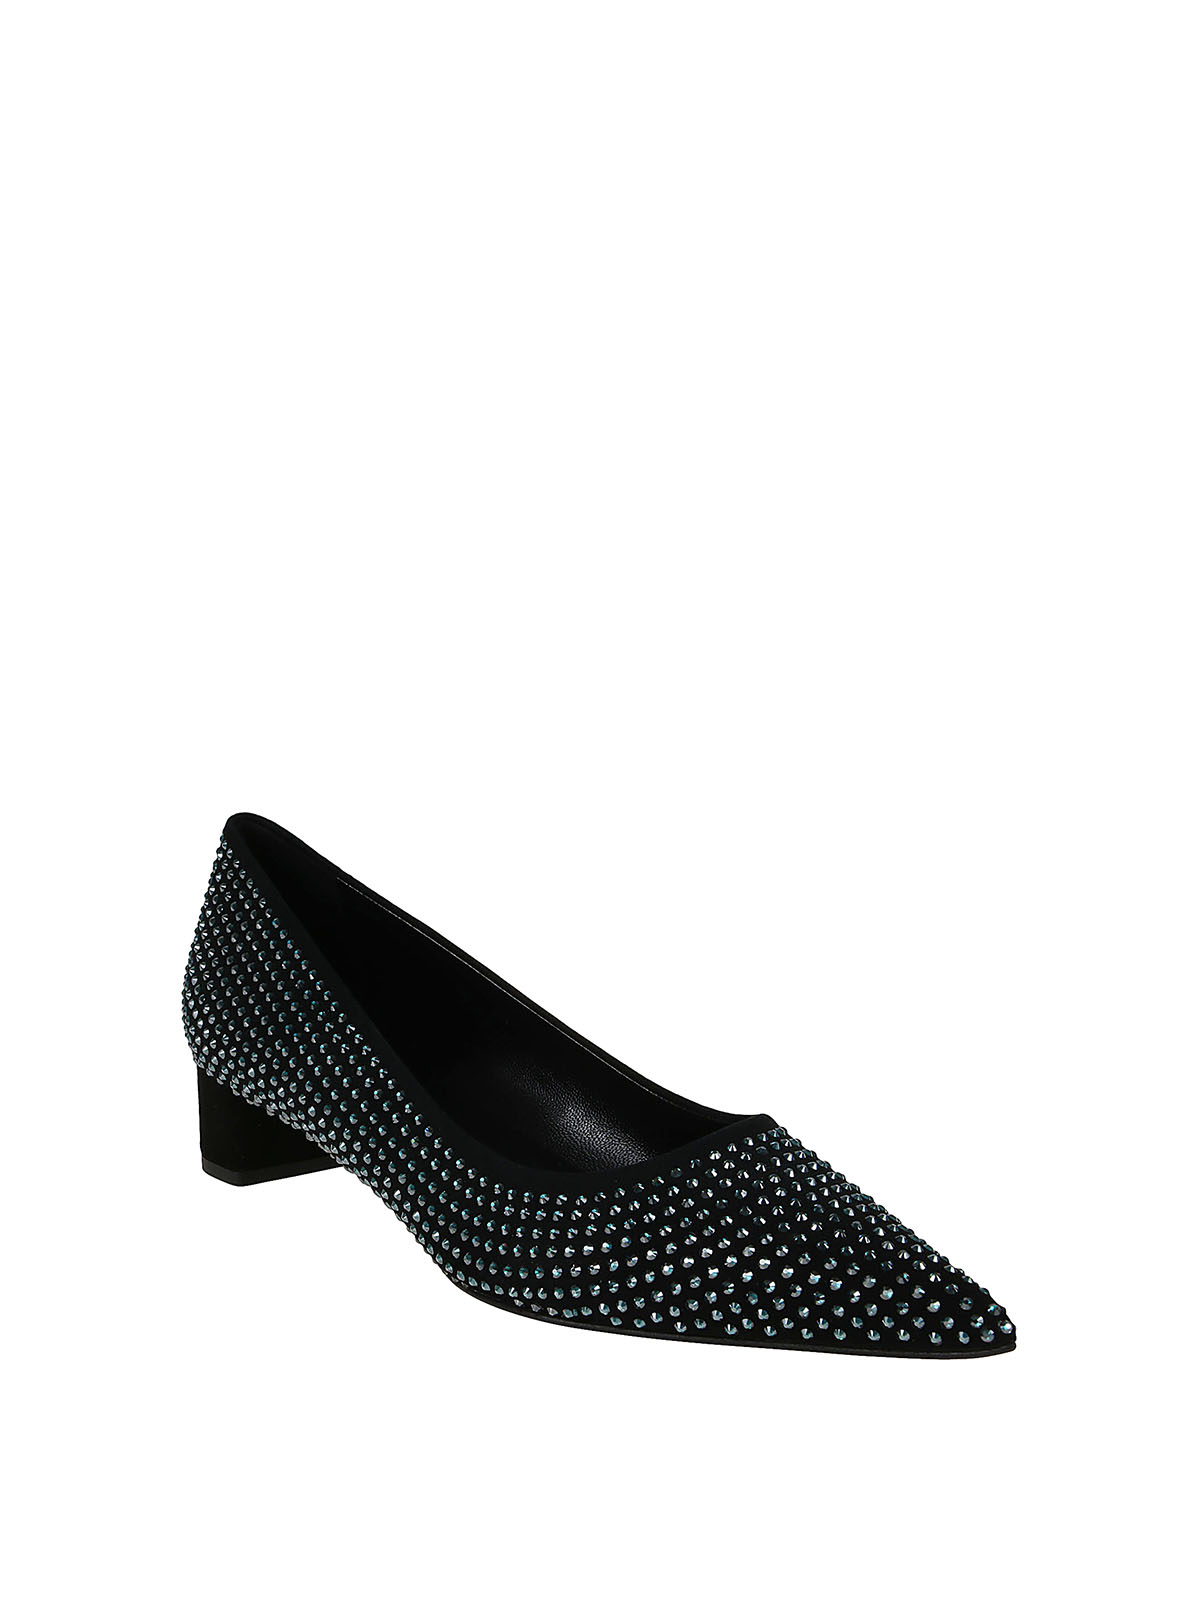 Court shoes EDDY DANIELE - Olga pumps - EW22310CAM | Shop online at iKRIX